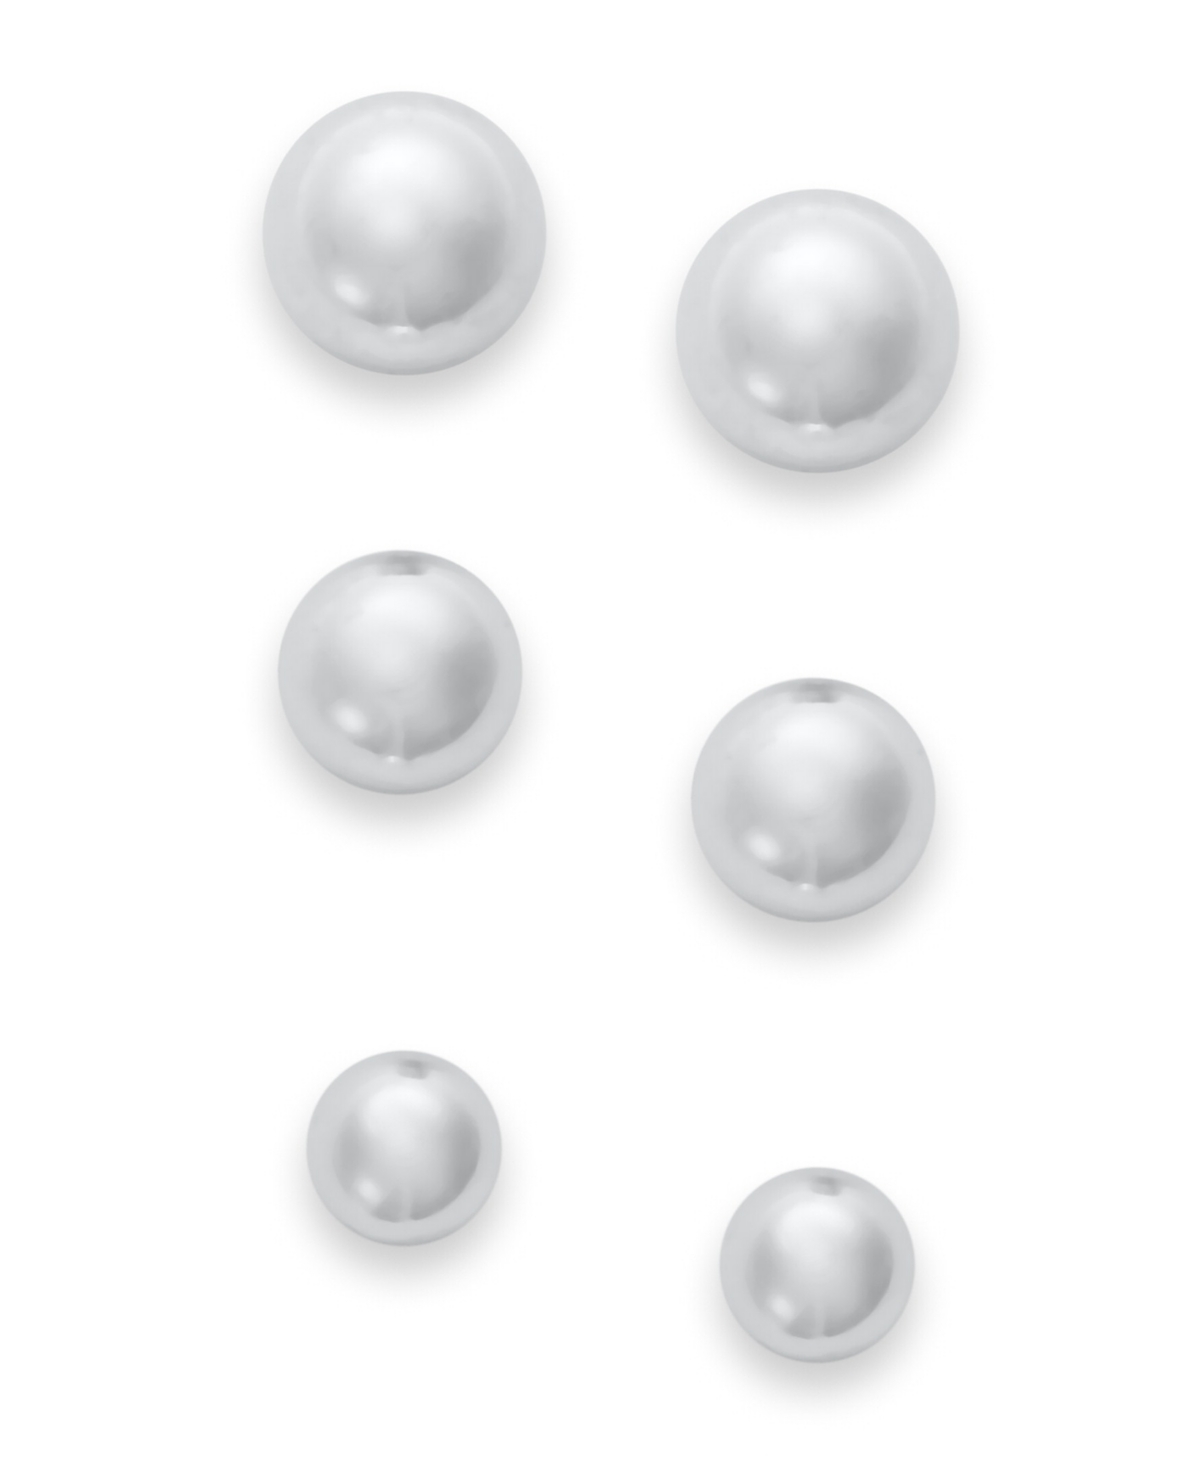 Giani Bernini Set of 3 Ball Stud Earrings in Sterling Silver, Created for Macy's